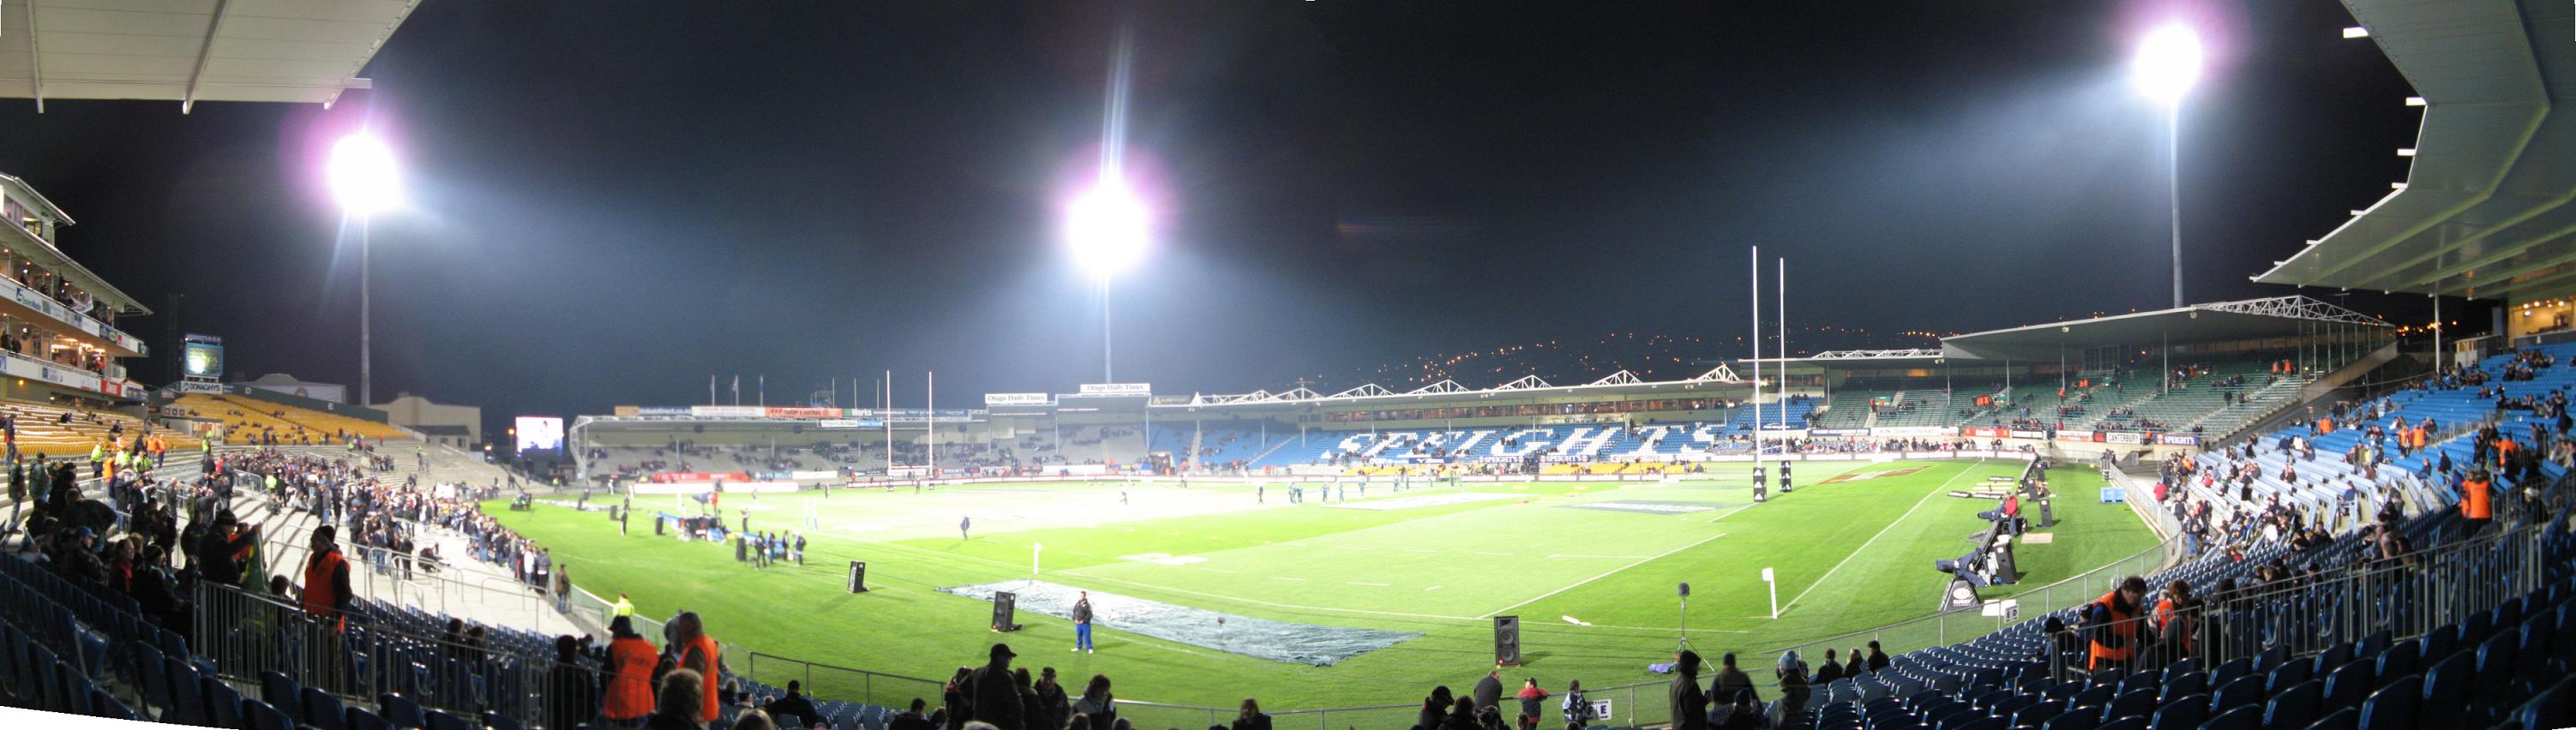 Carisbrook Stadium Dunedin